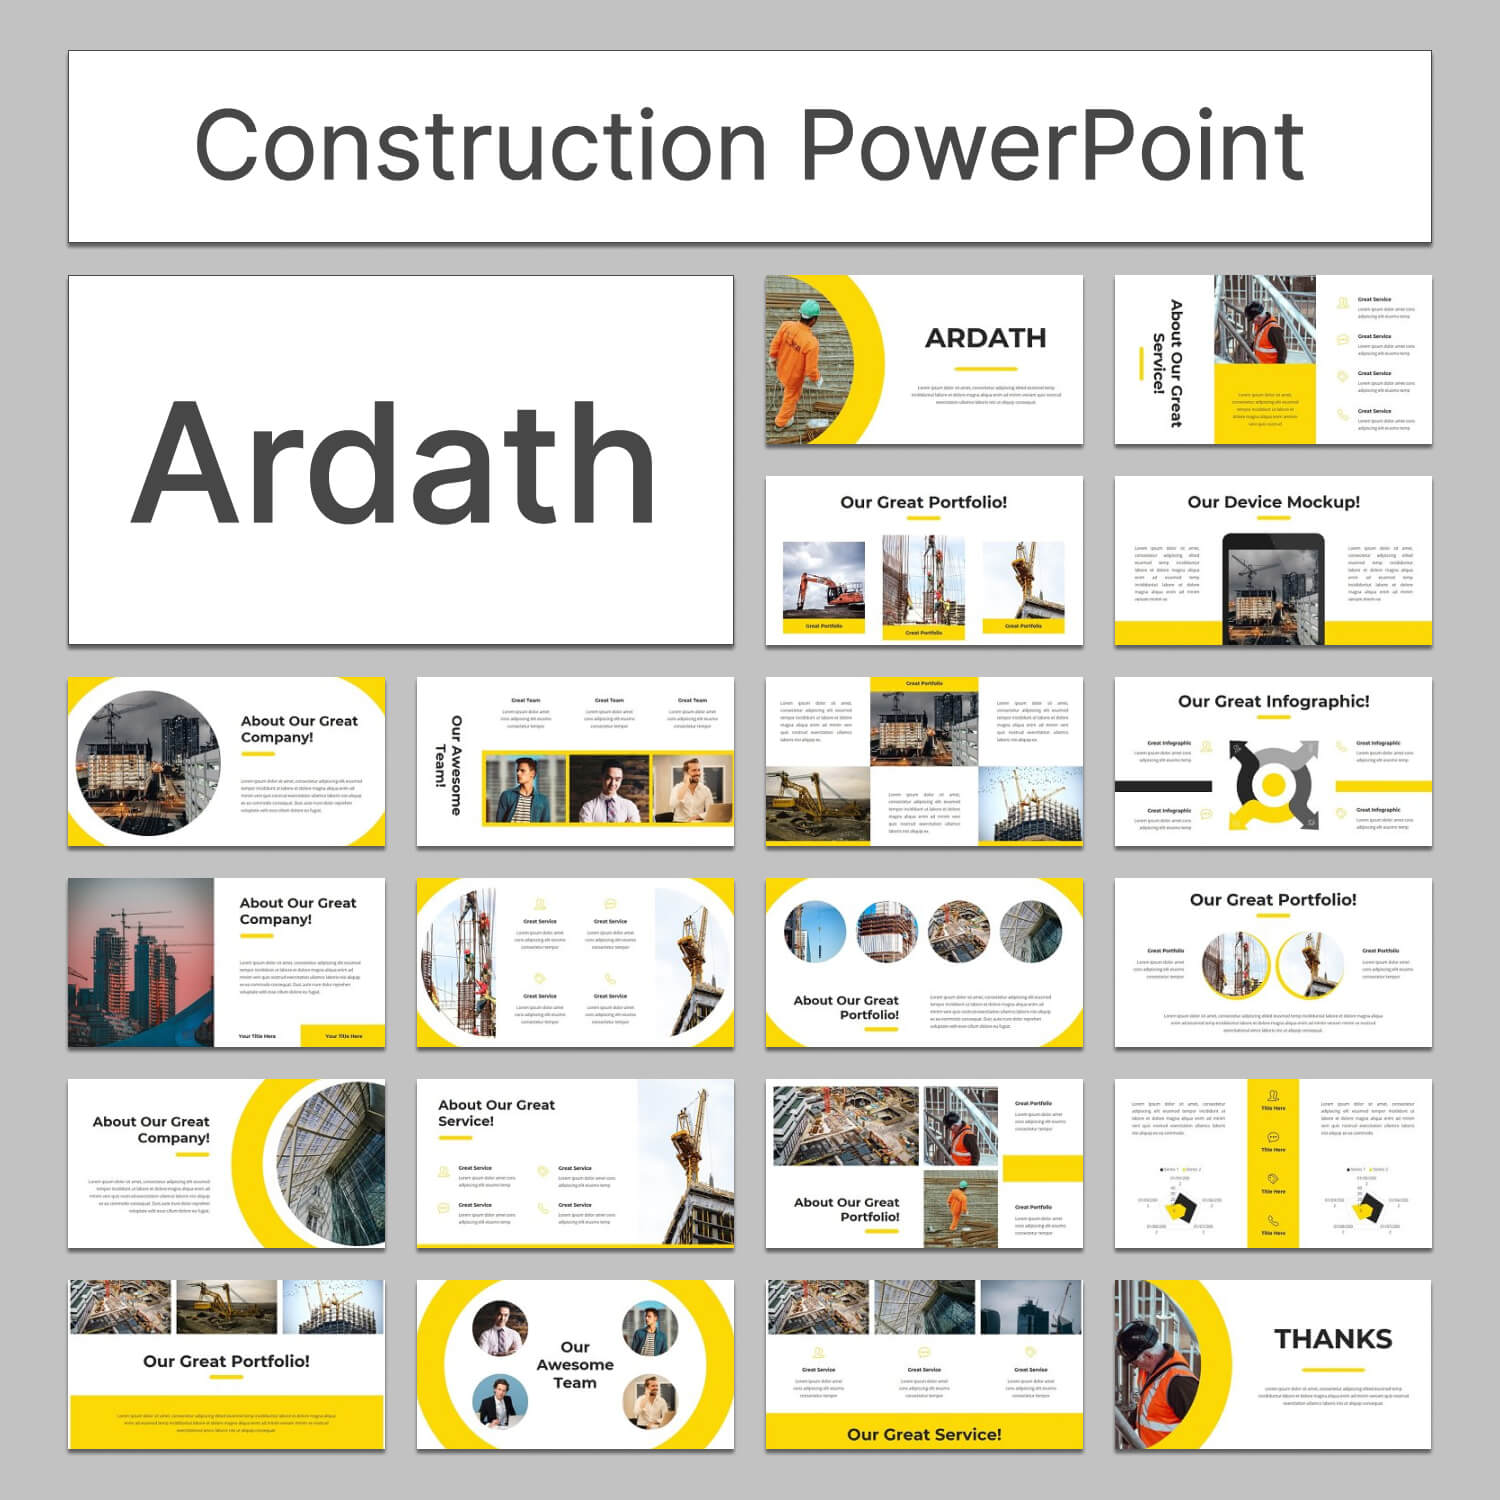 Ardata construction slides for Powerpoint.